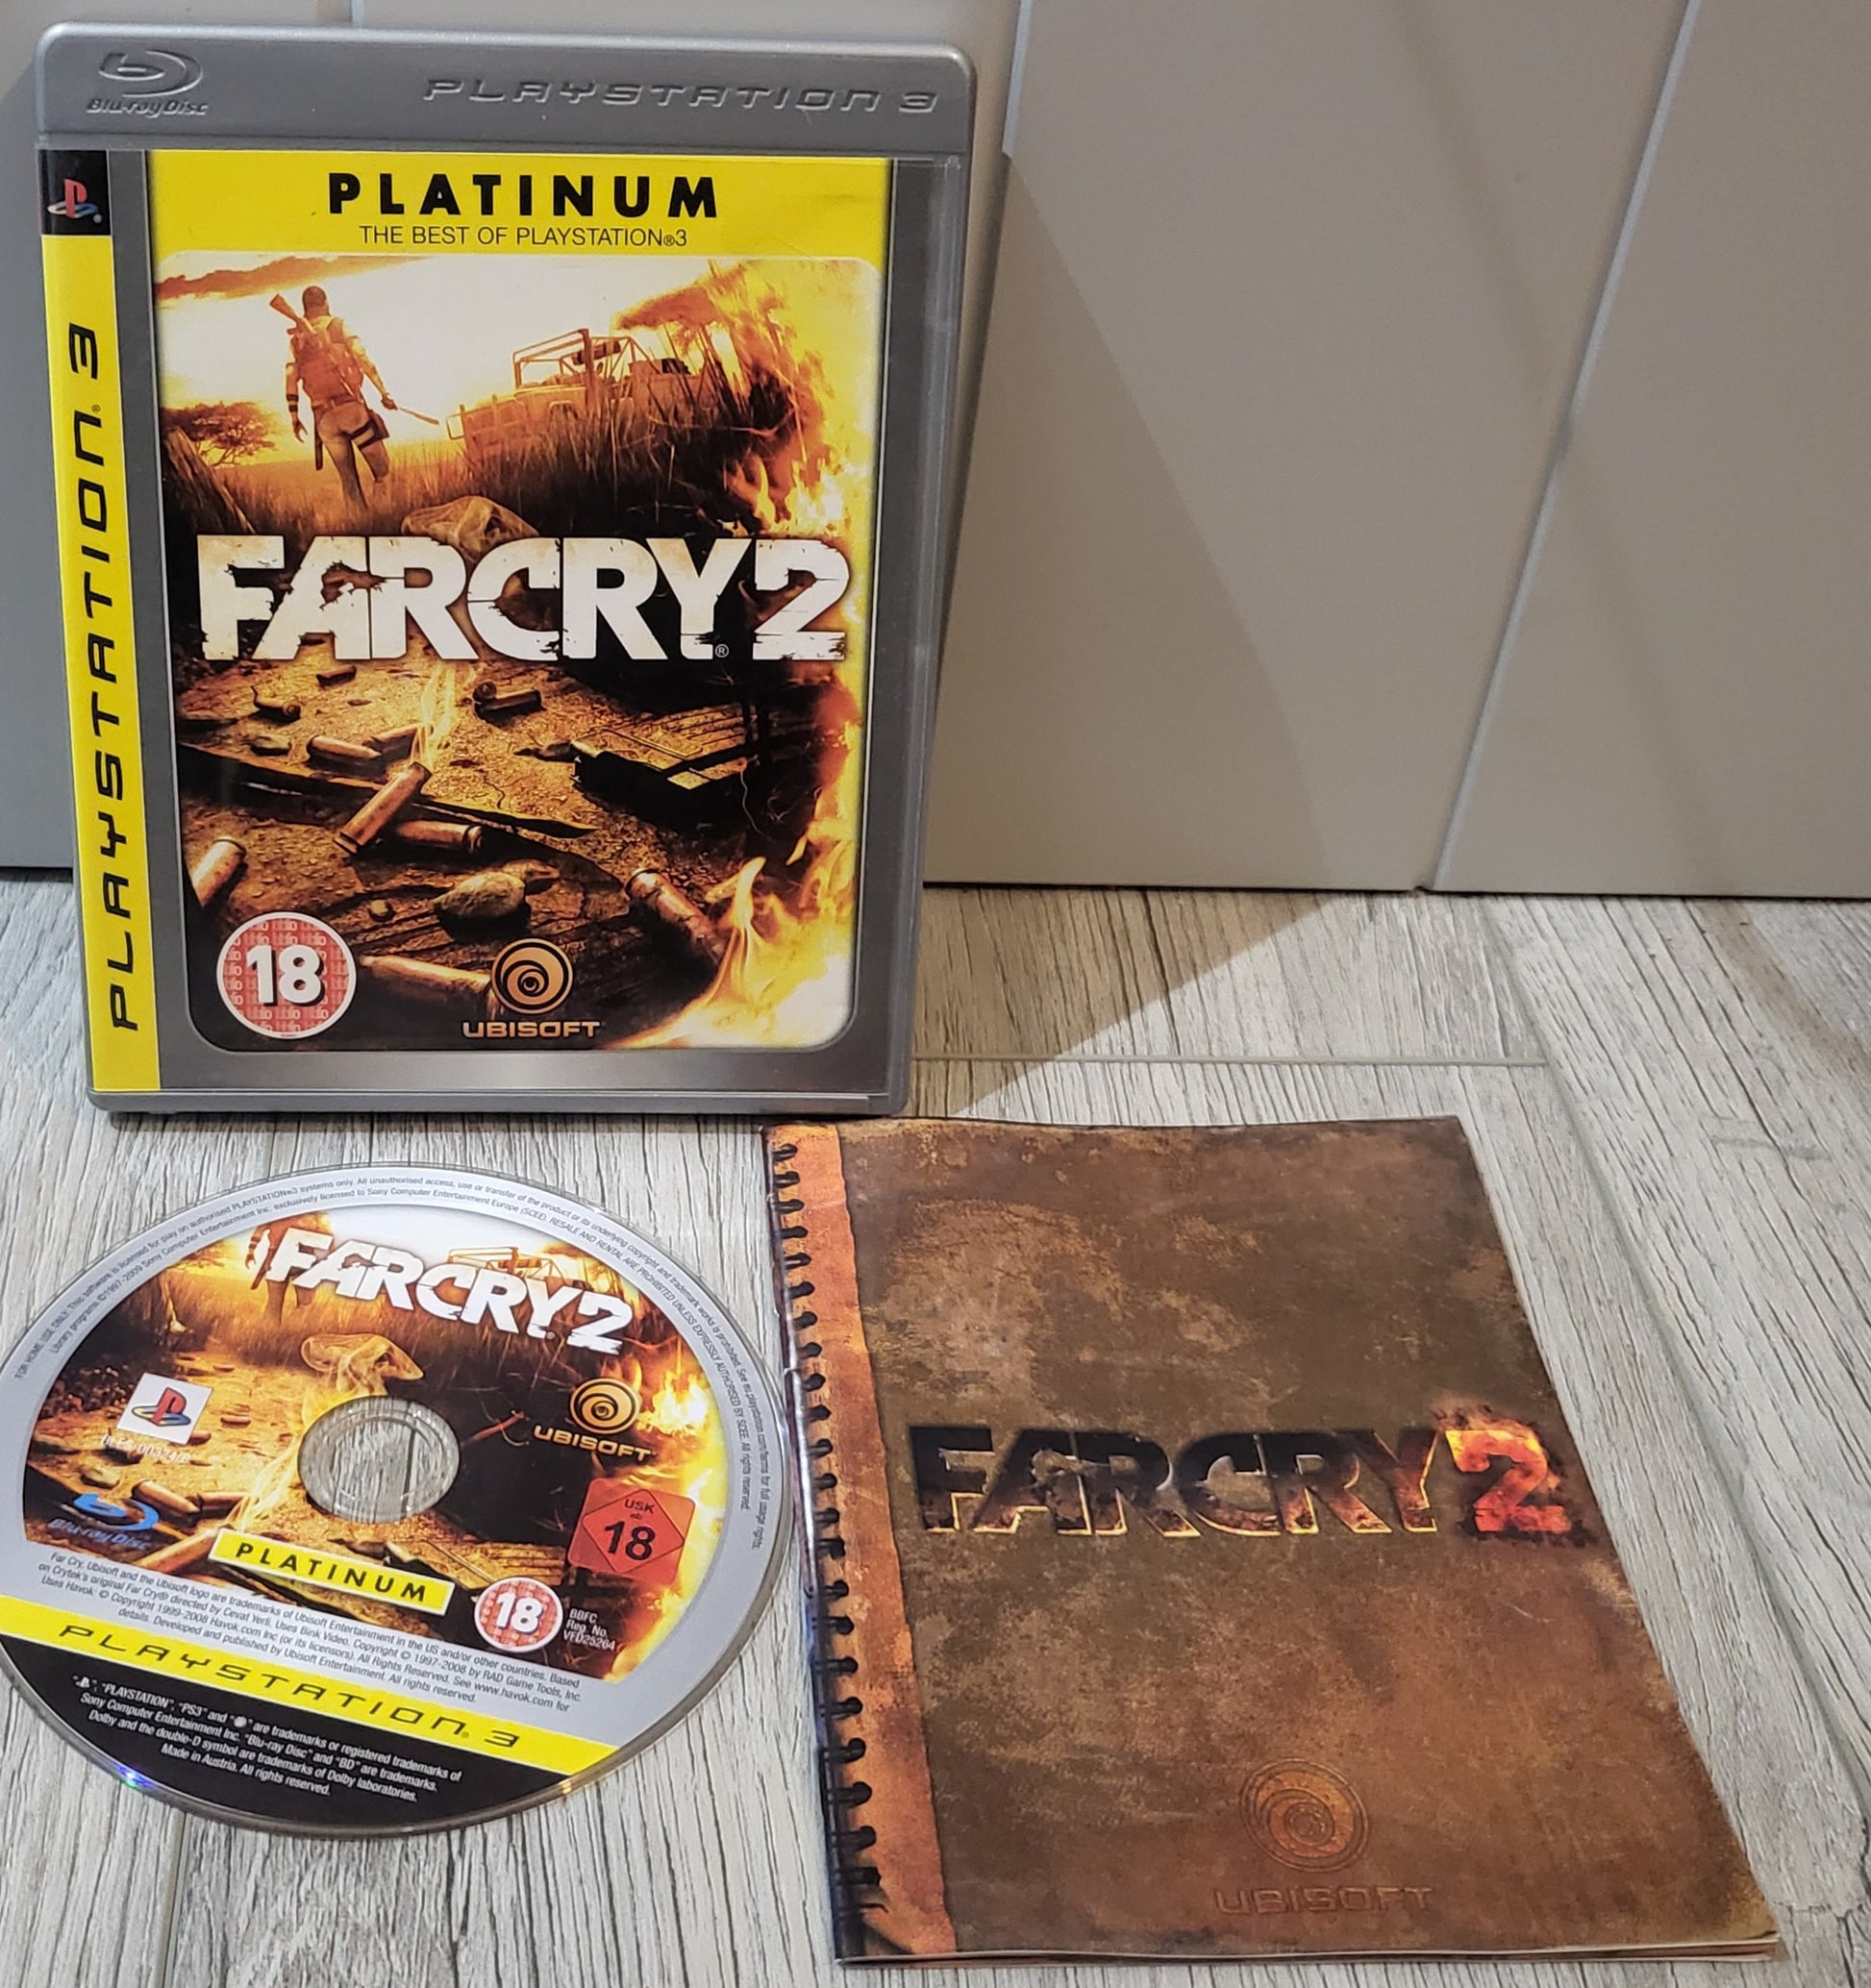 Far Cry 2 for PlayStation 3